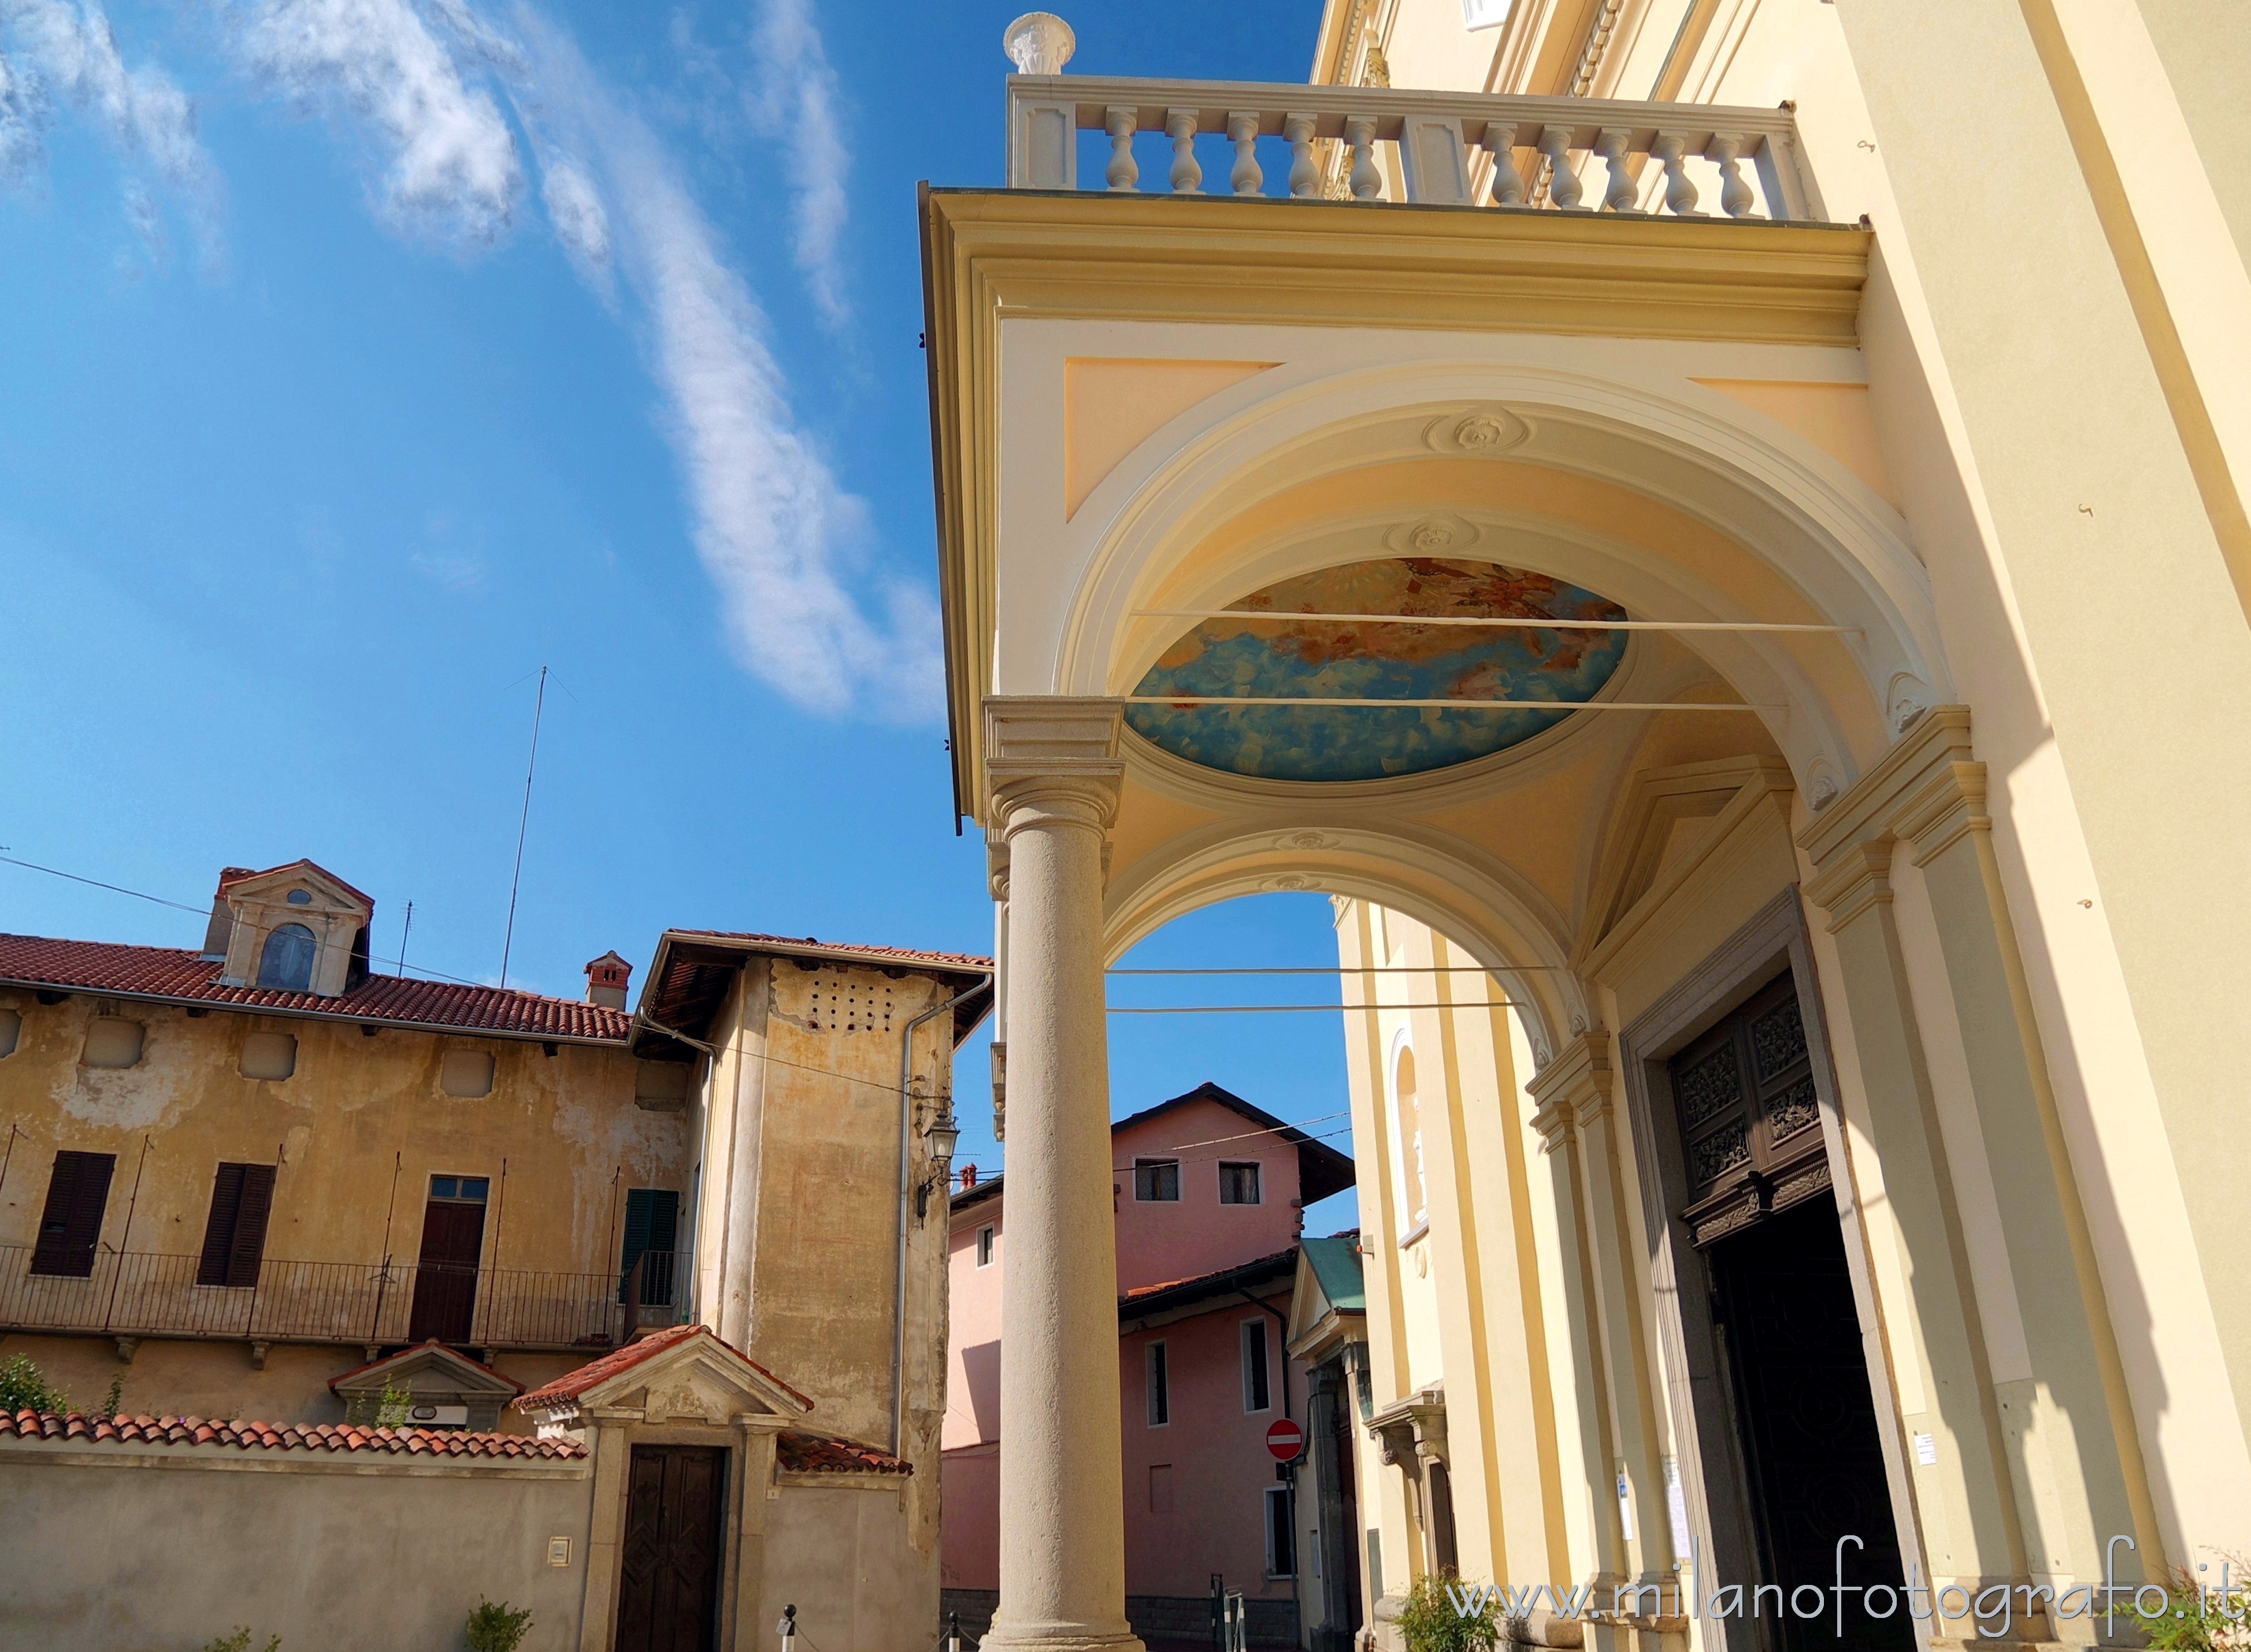 Candelo (Biella, Italy): Pronao of the Church of Saint Lawrence - Candelo (Biella, Italy)